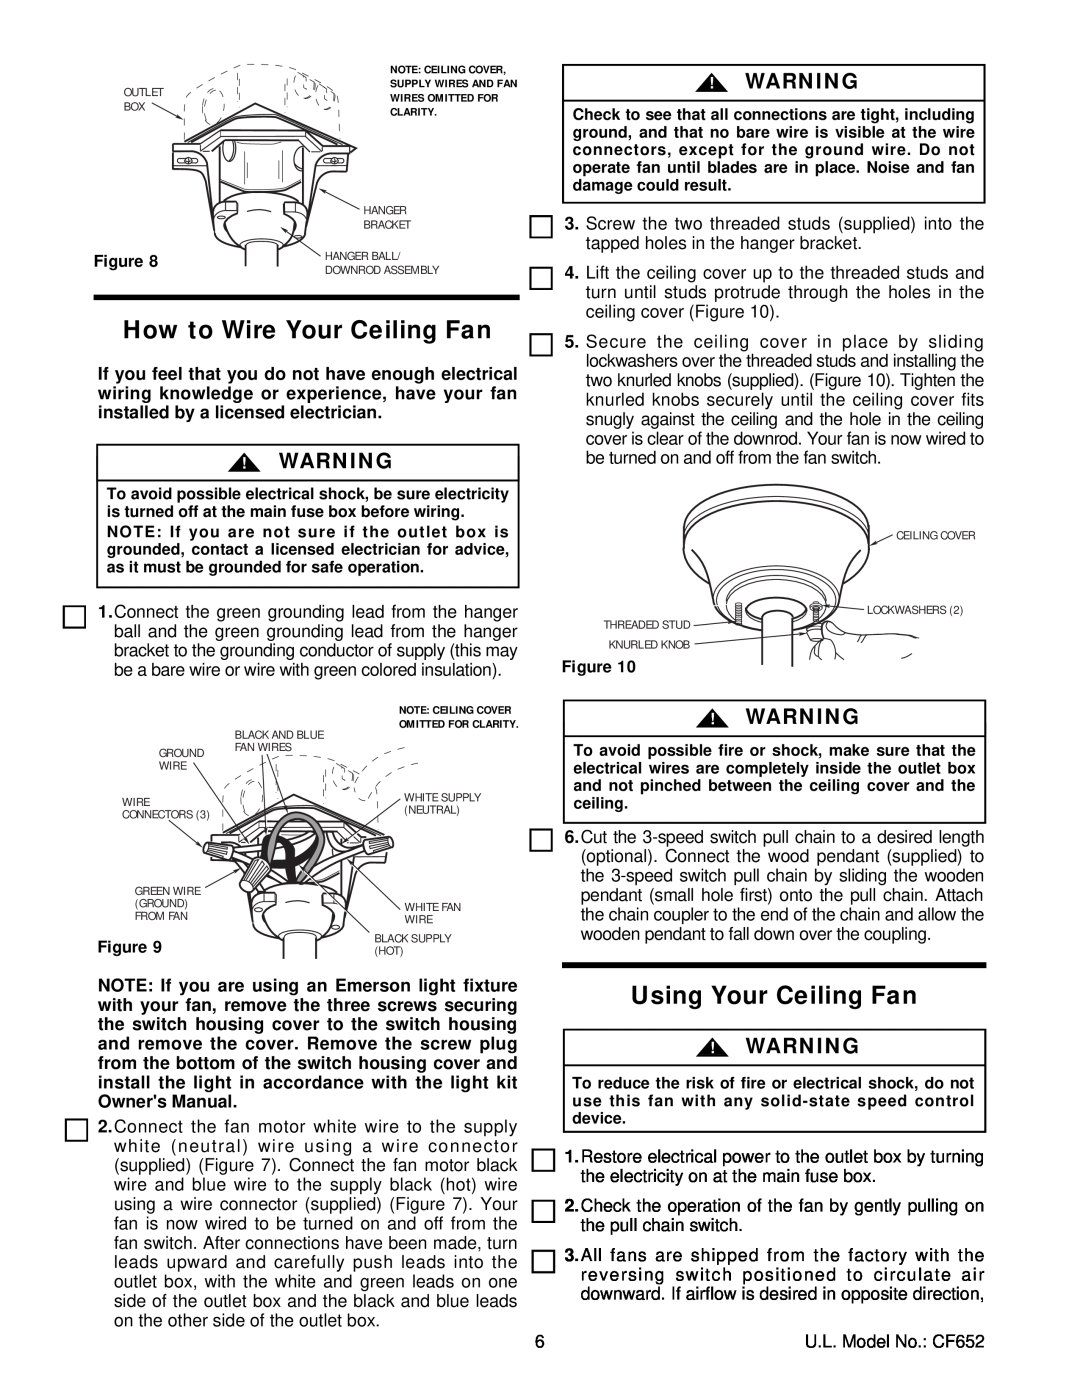 Hunter Fan CF652AW01, CF652ORB01, CF652CK01, CF652SCB01 warranty How to Wire Your Ceiling Fan, Using Your Ceiling Fan, Figure 